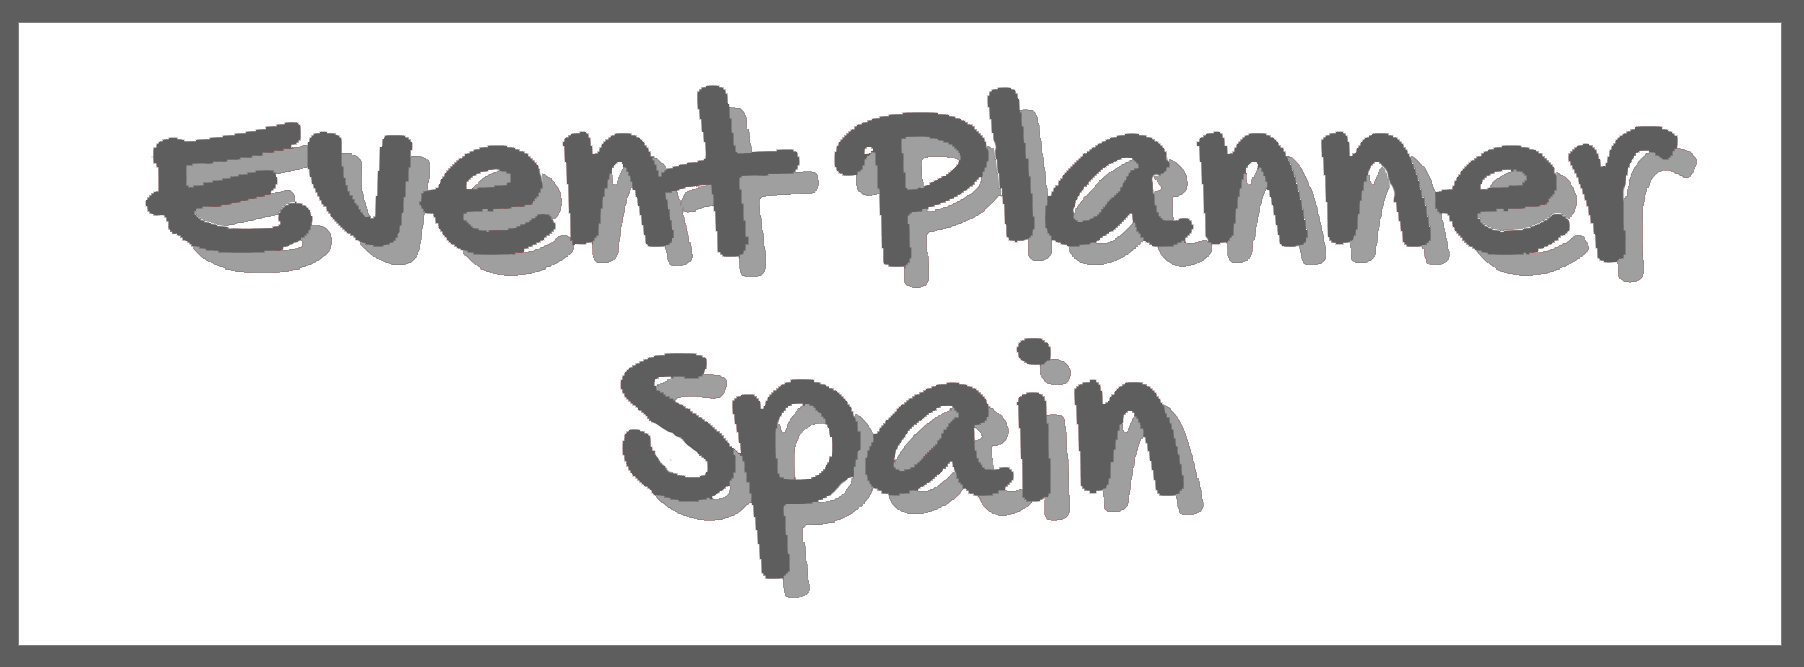 Event Planner Spain